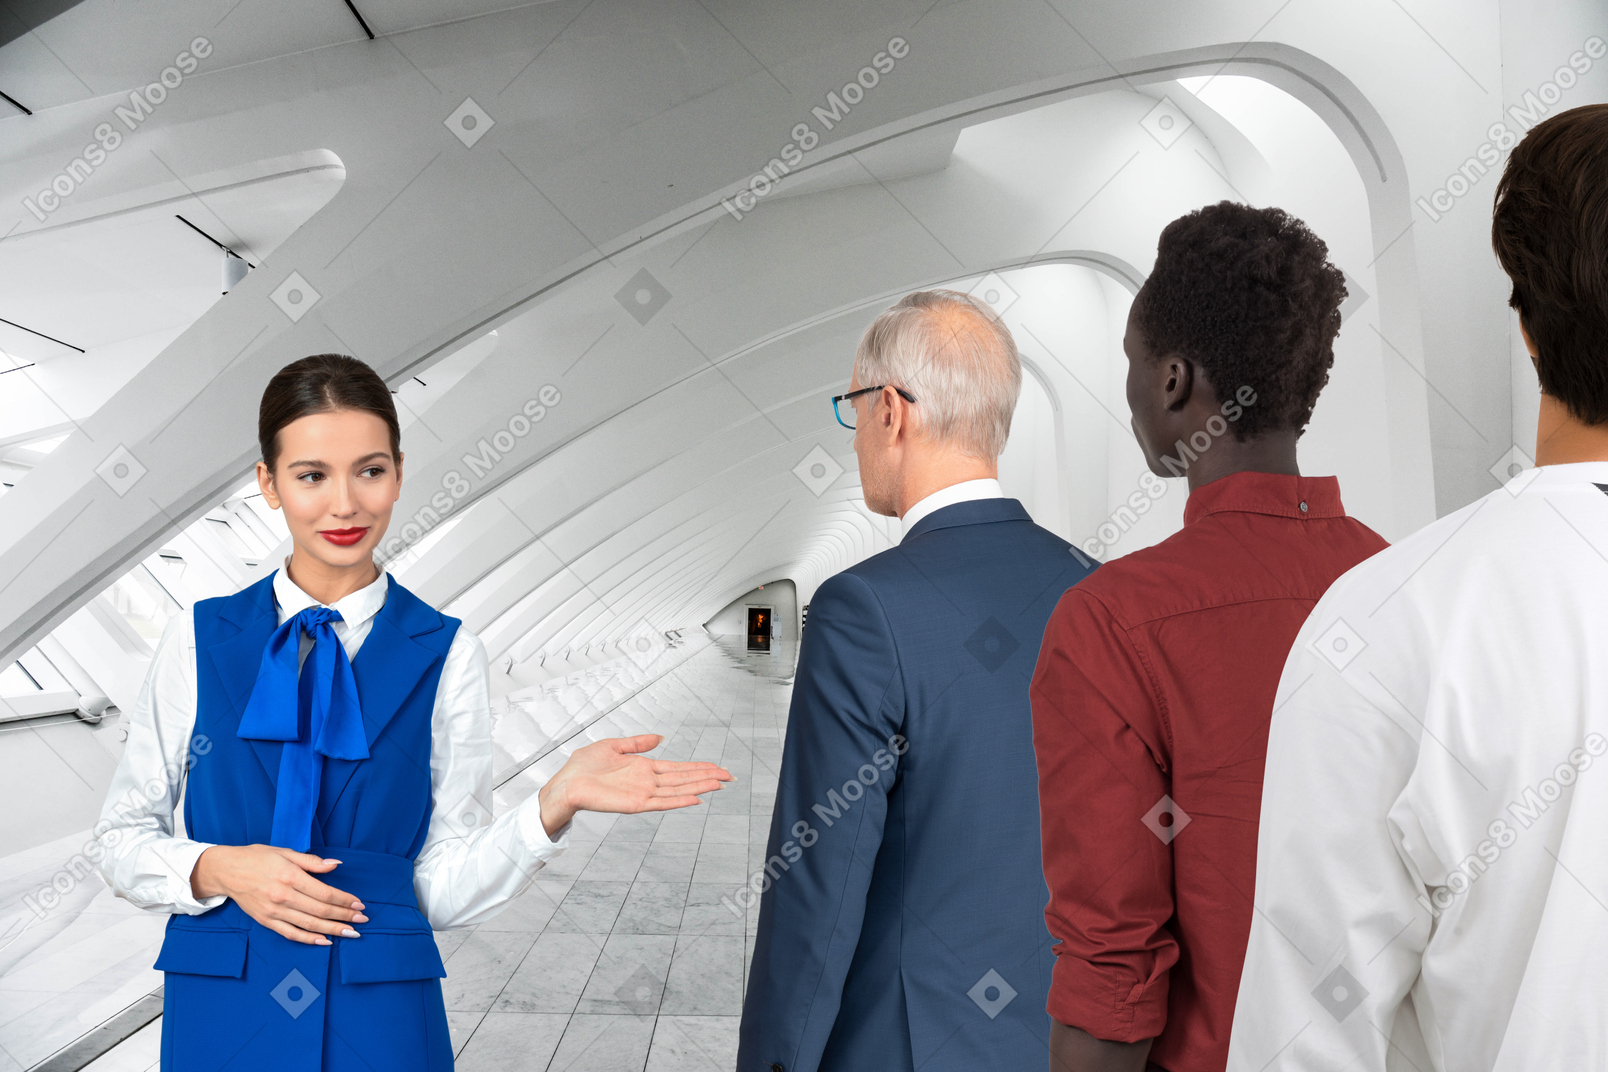 Woman welcoming passengers